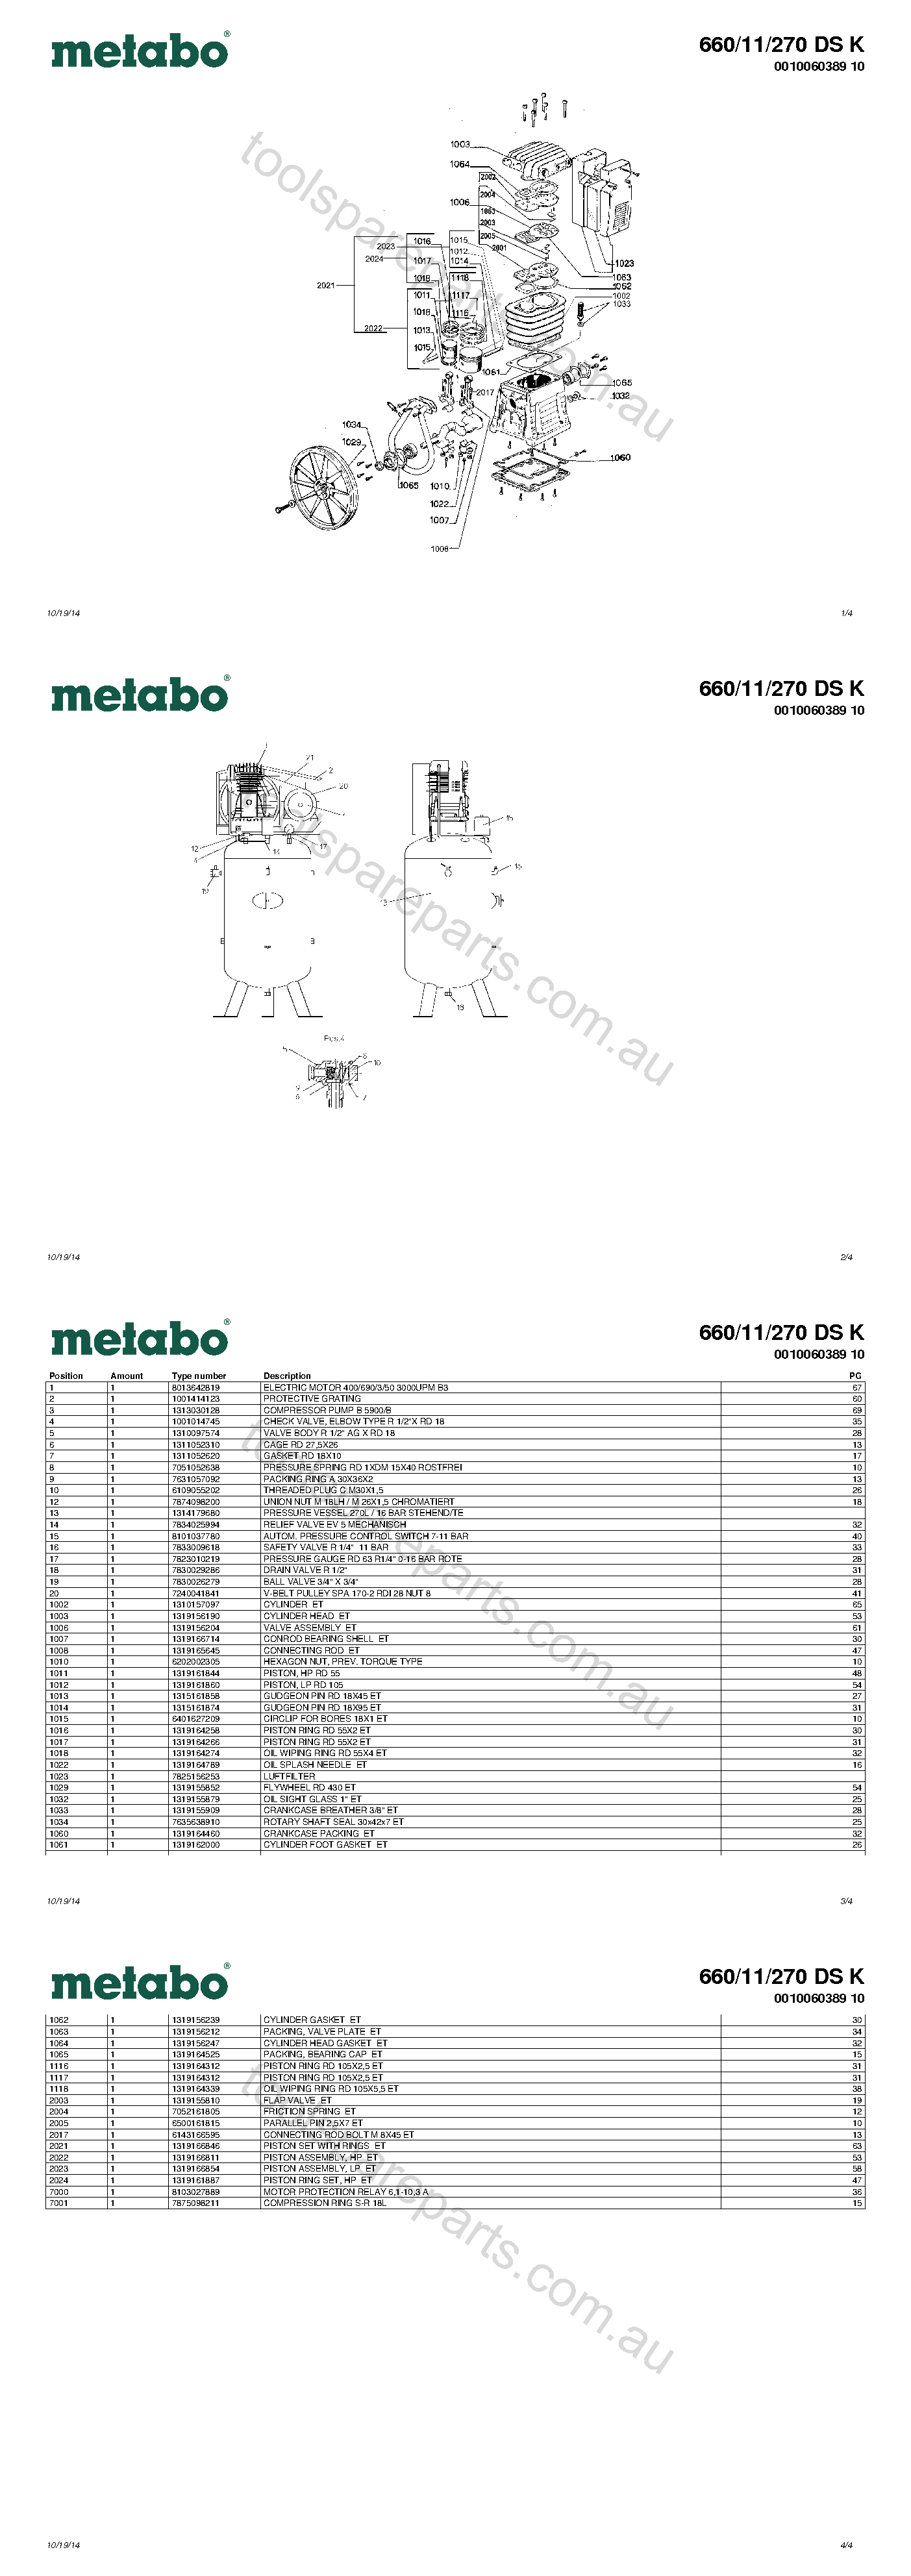 Metabo 660/11/270 DS K 0010060389 10  Diagram 1